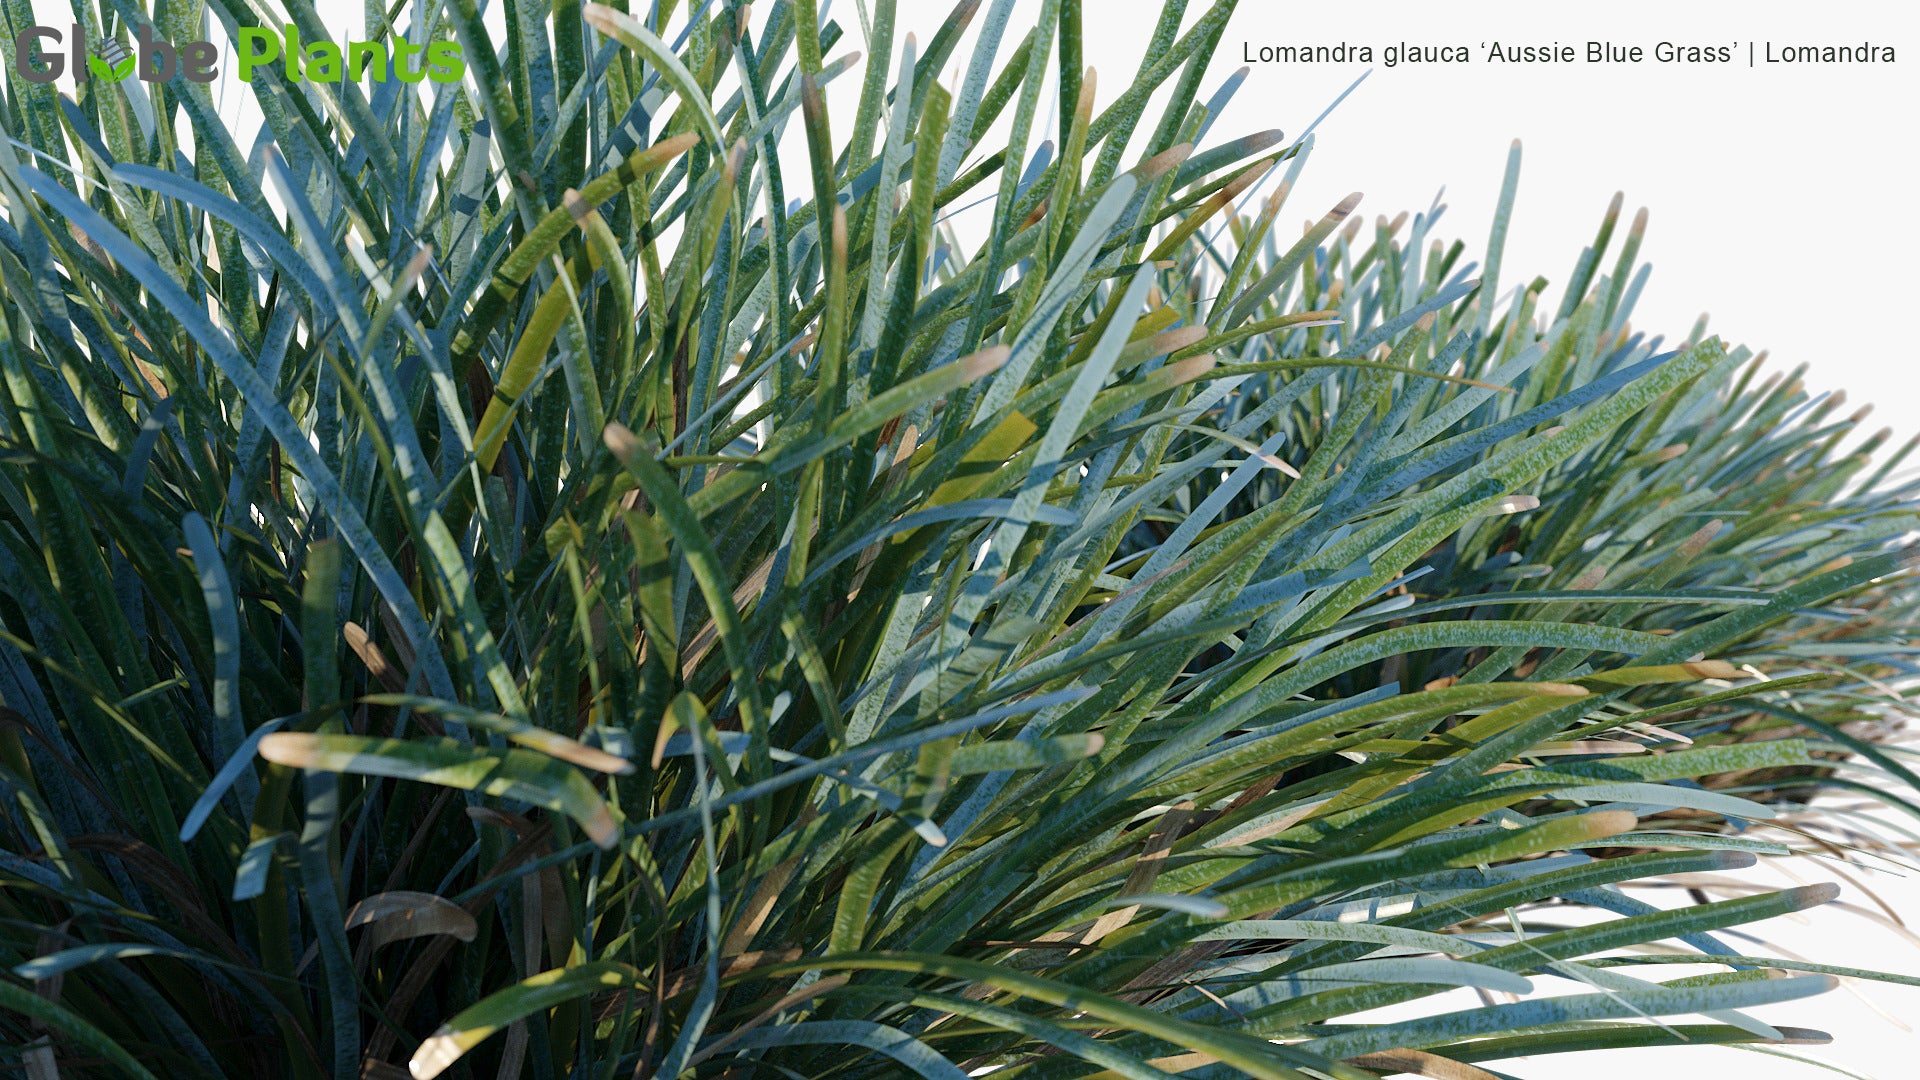 Lomandra Glauca 'Aussie Blue Grass' - Mat Rush